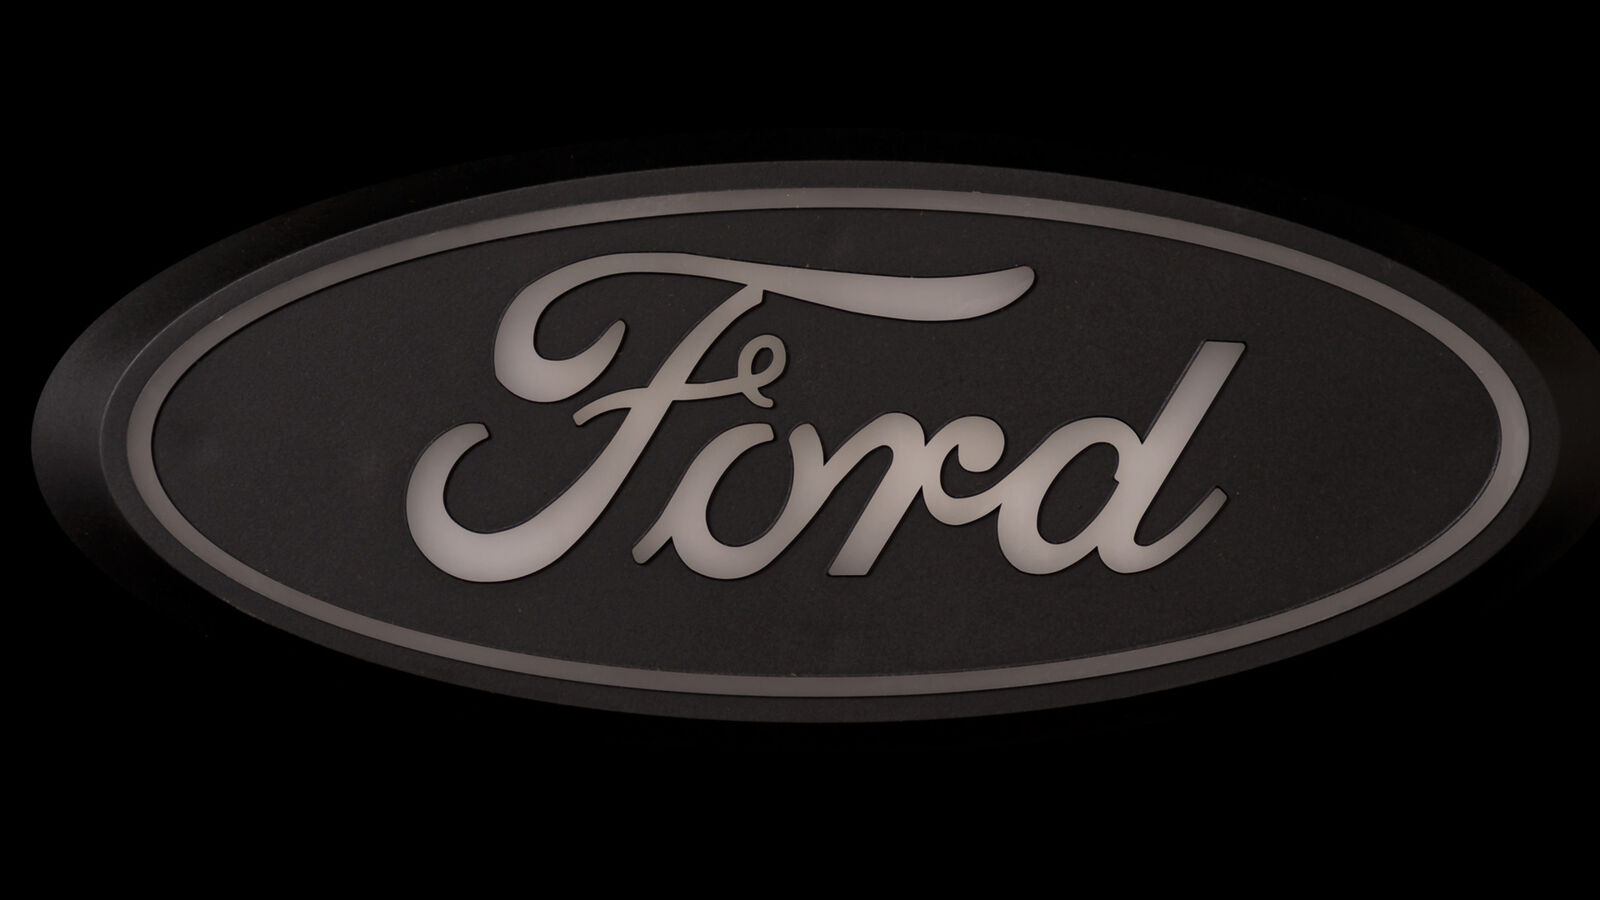 THF Illuminated LED Emblem (15-19) Ford F-150 - The HID Factory